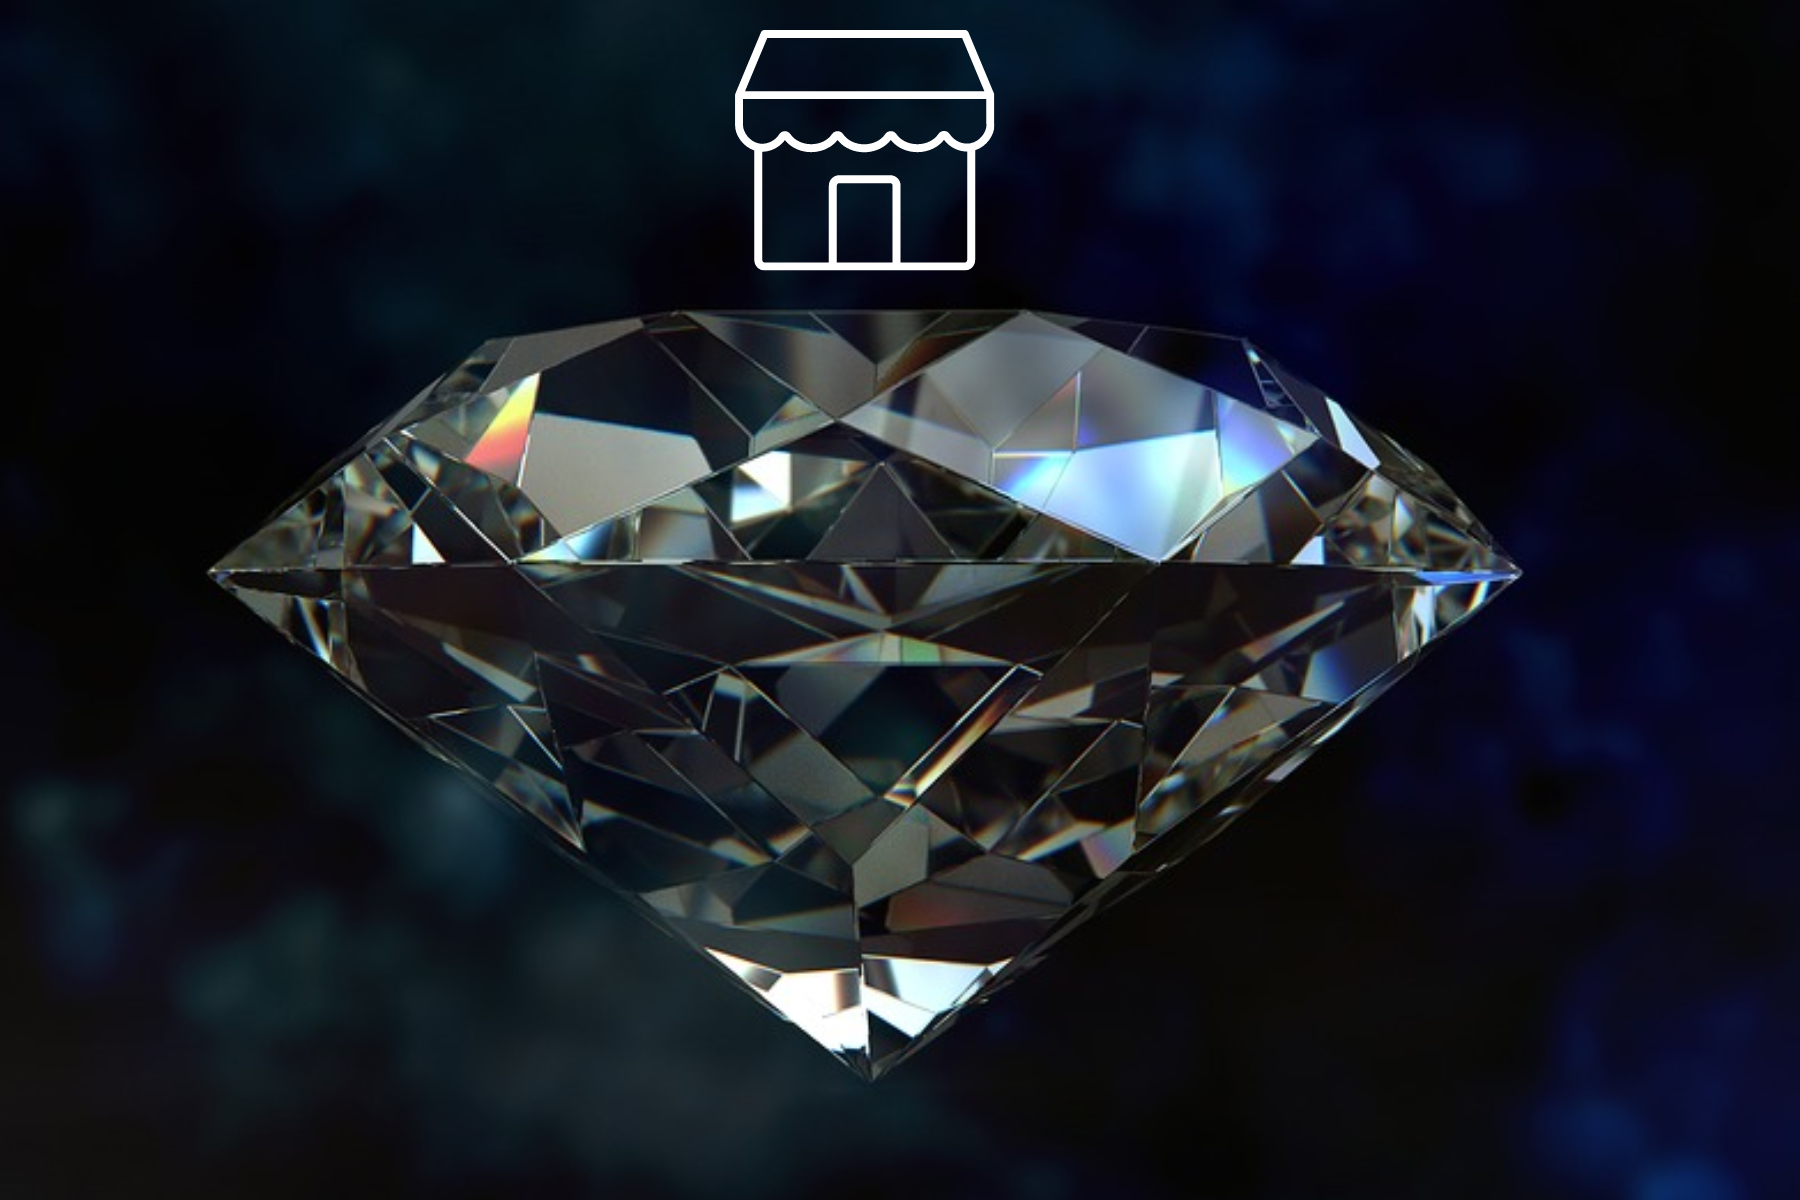 A 3D diamond carrying a marketplace's logo